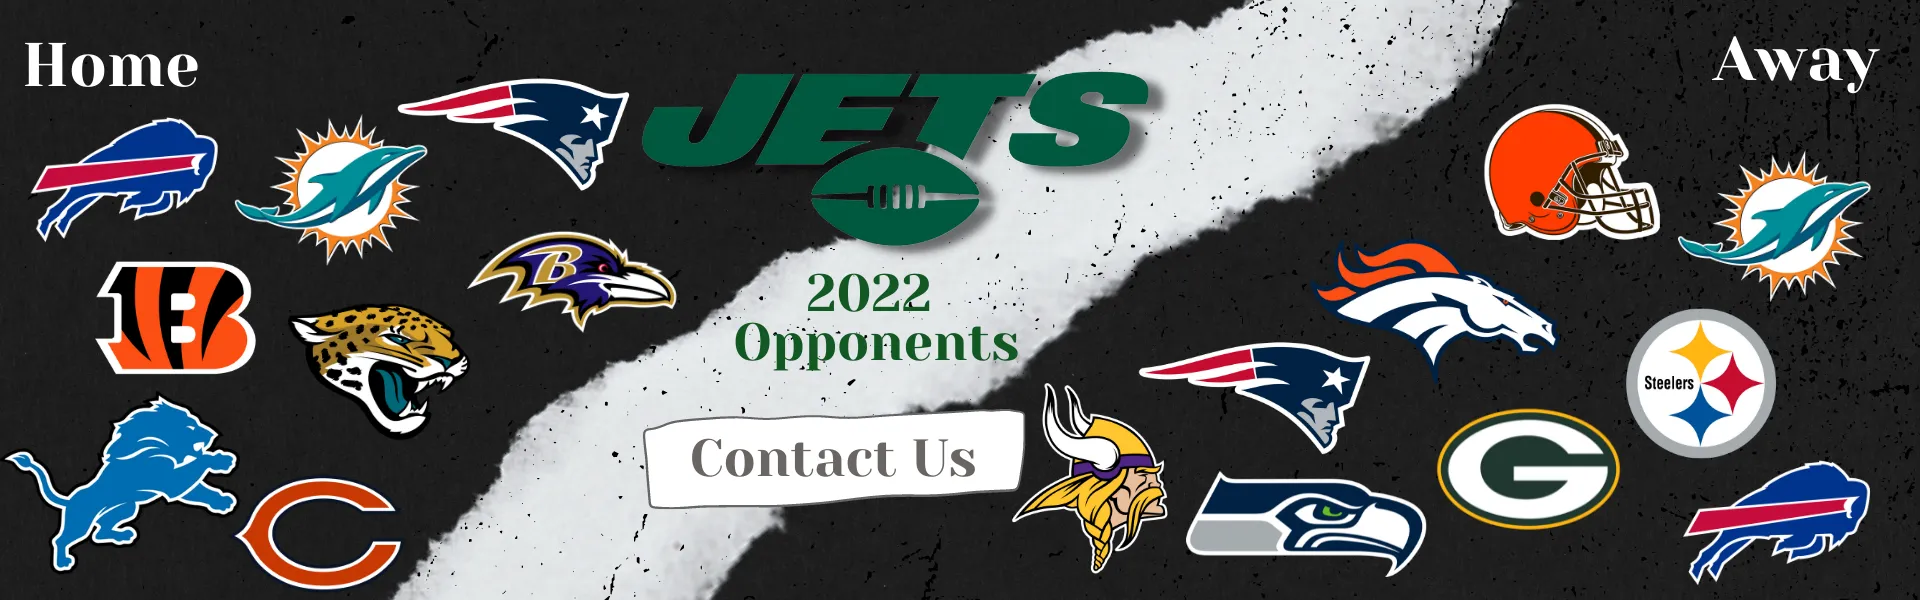 New York Jets 2022 opponents